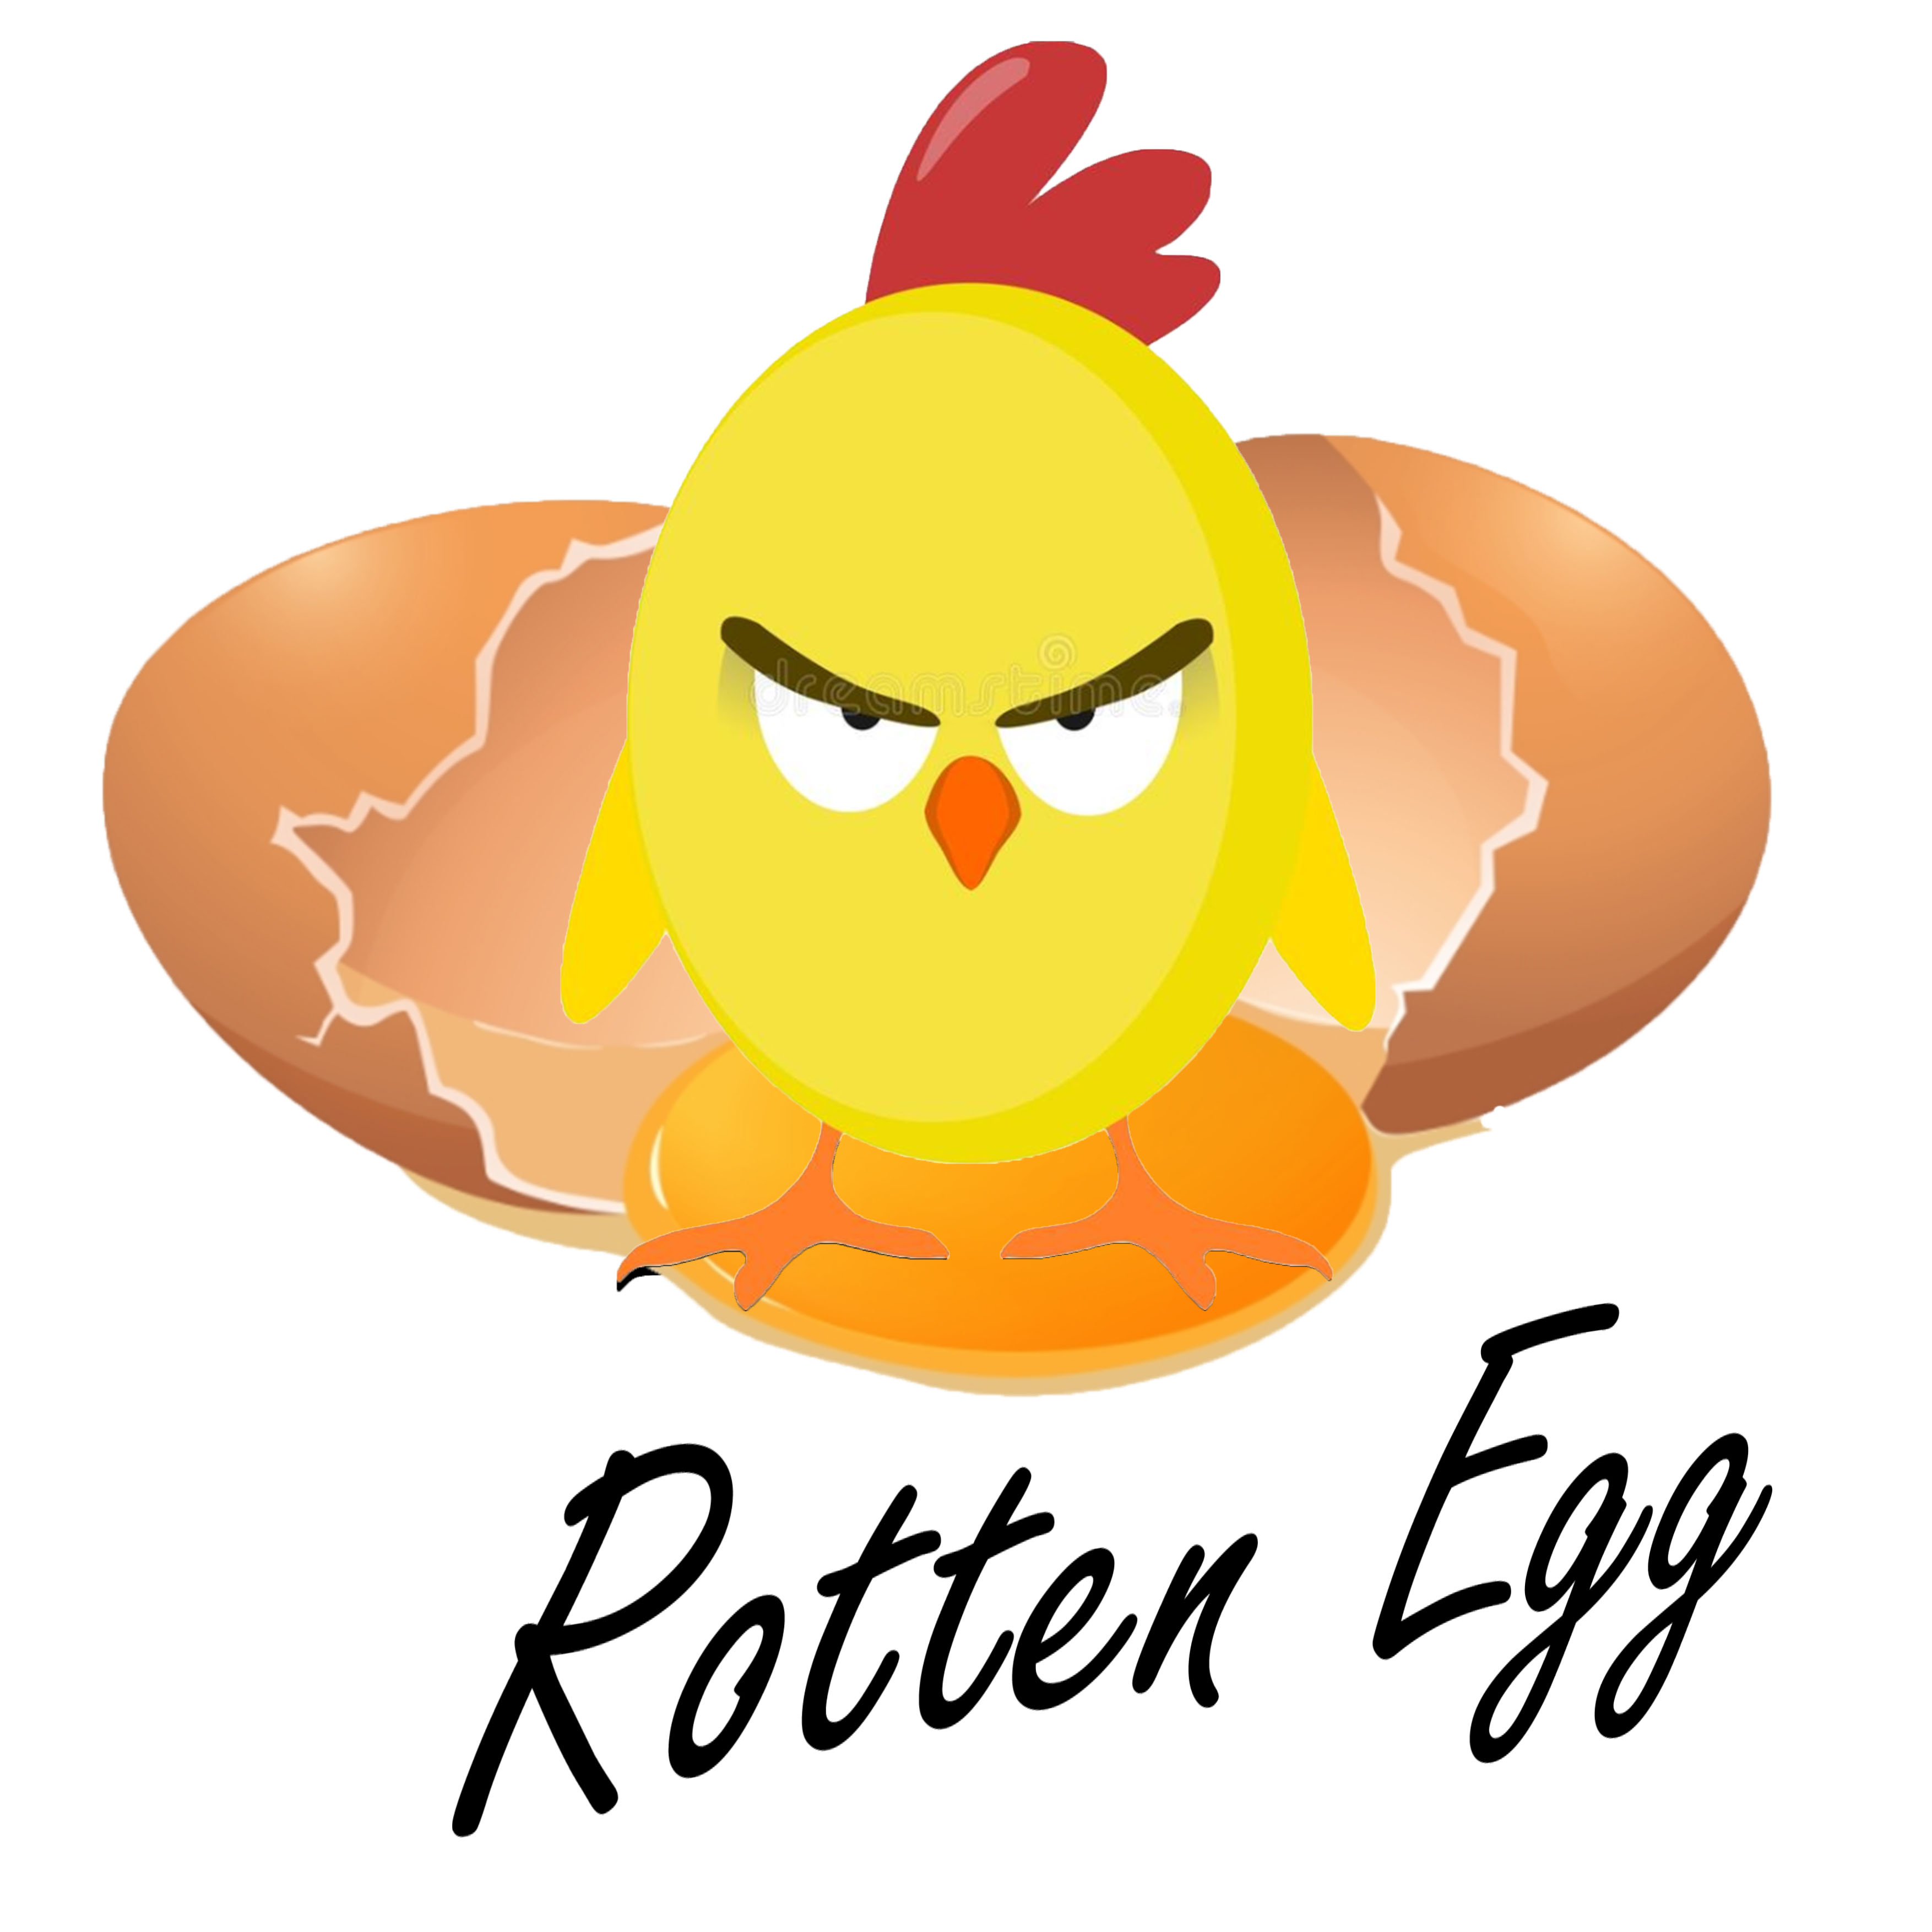 Rotten Egg by Mrmouse1718 on DeviantArt